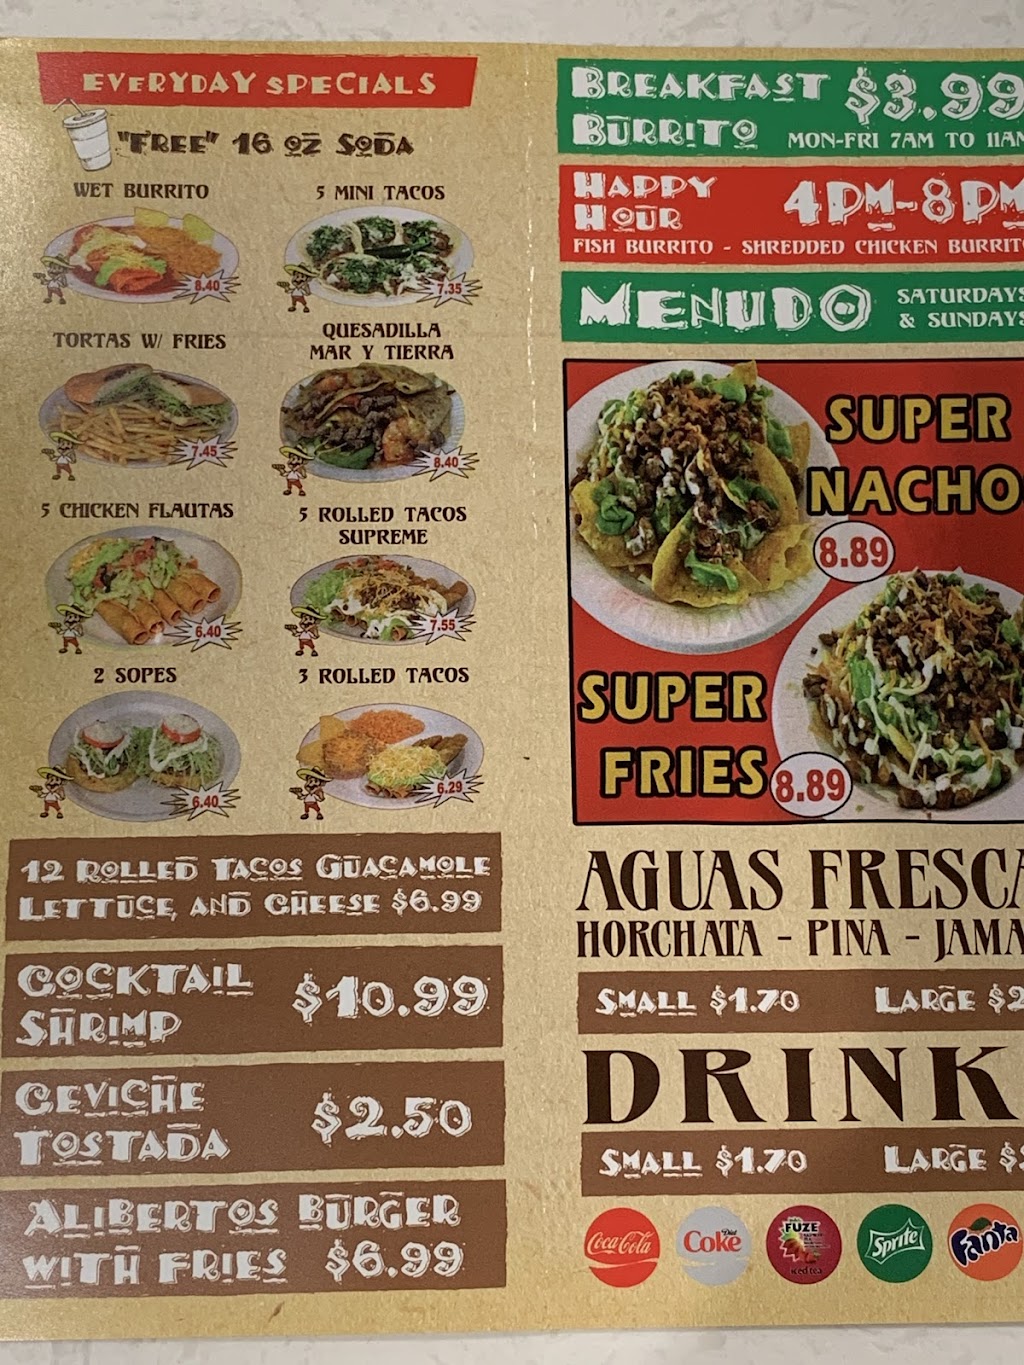 Aliberto’s Mexican Food | 7330 Cherry Ave, Fontana, CA 92336 | Phone: (909) 829-2063